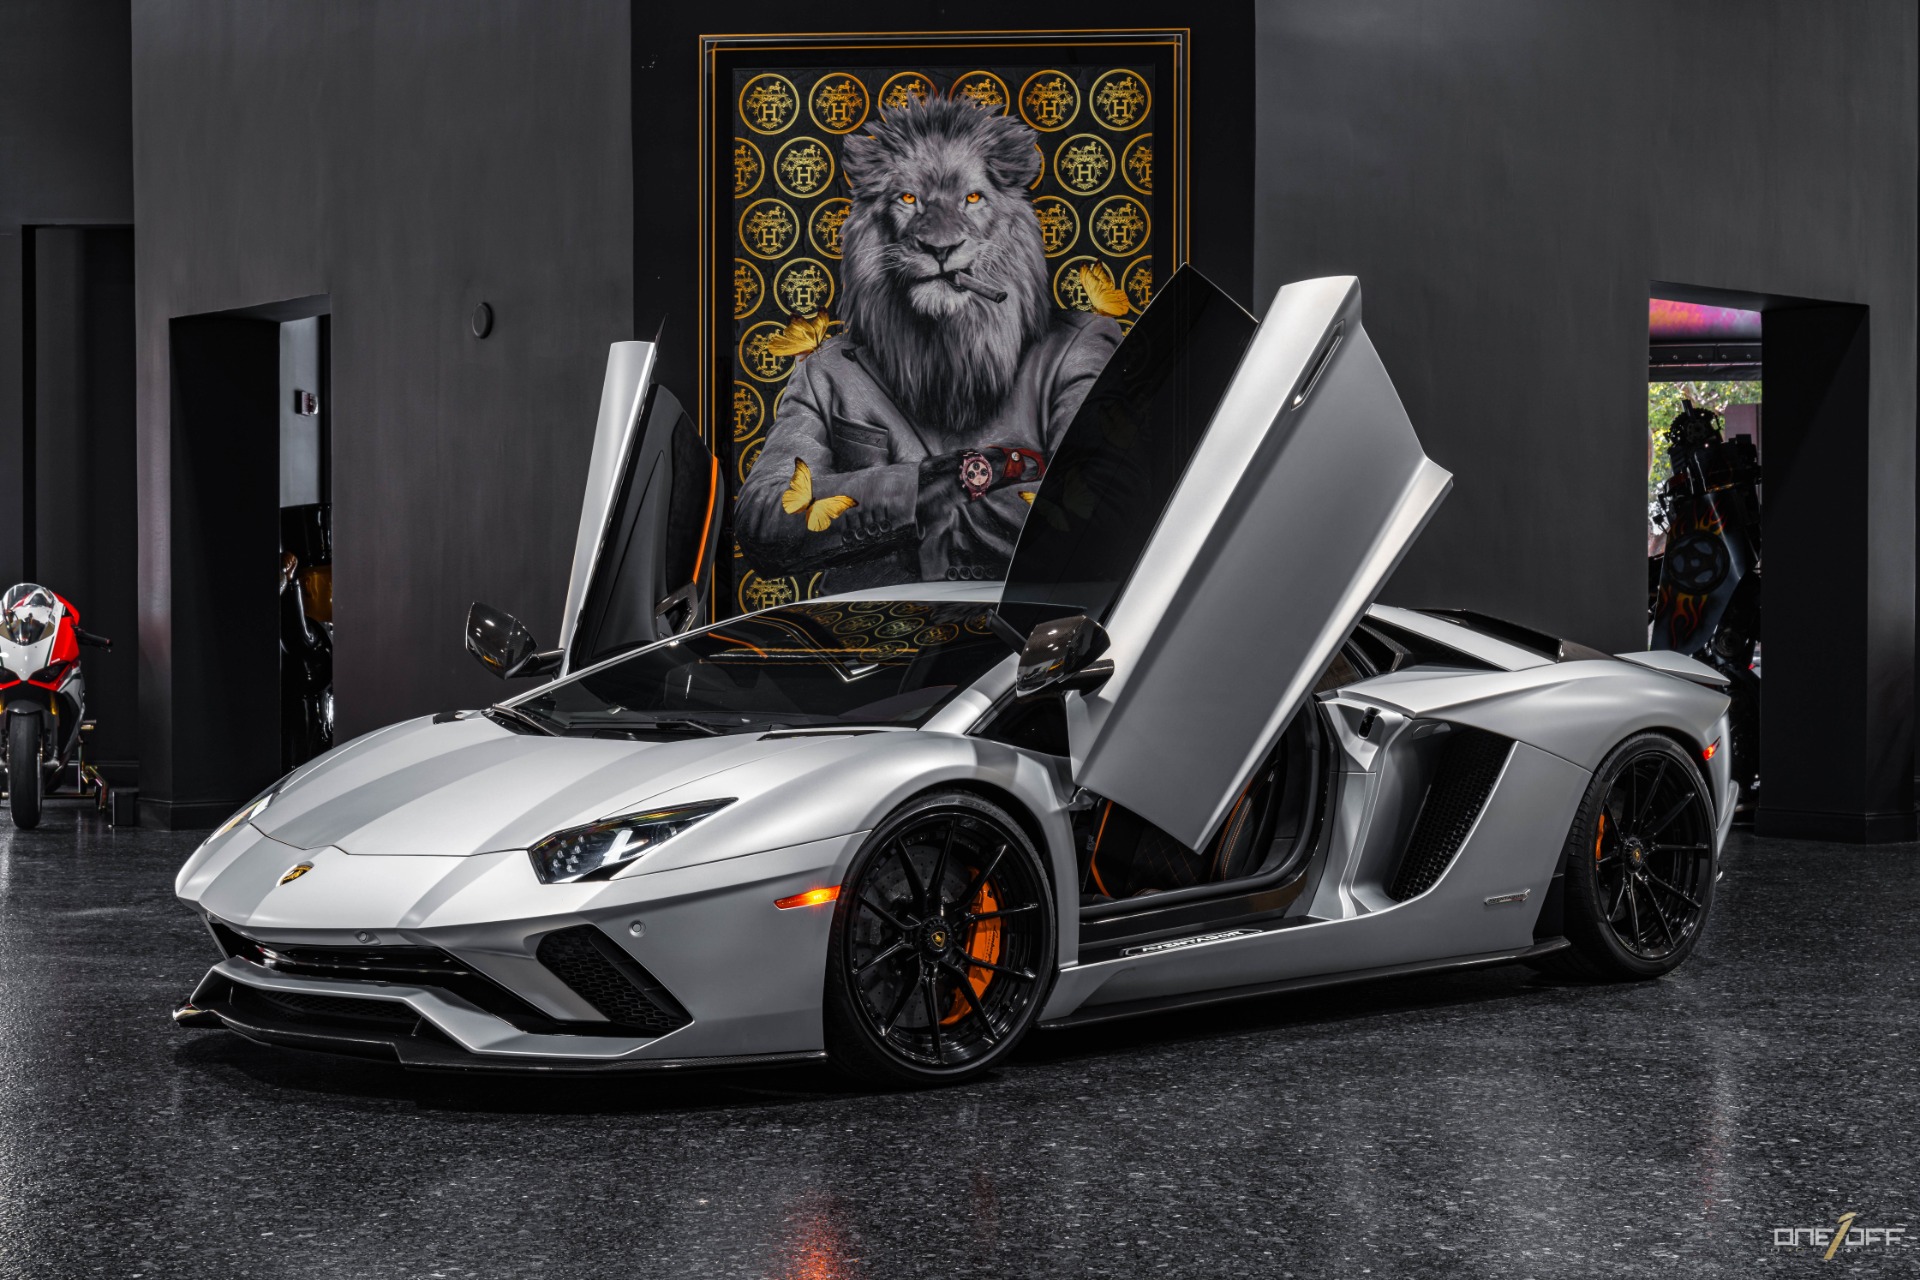 Used 2018 Lamborghini Aventador LP 740-4 S FULL Exterior Carbon, Factory  Matte Paint Anrky Wheels! For Sale ($430,000) Exotics Hunter Stock  #C-A06877